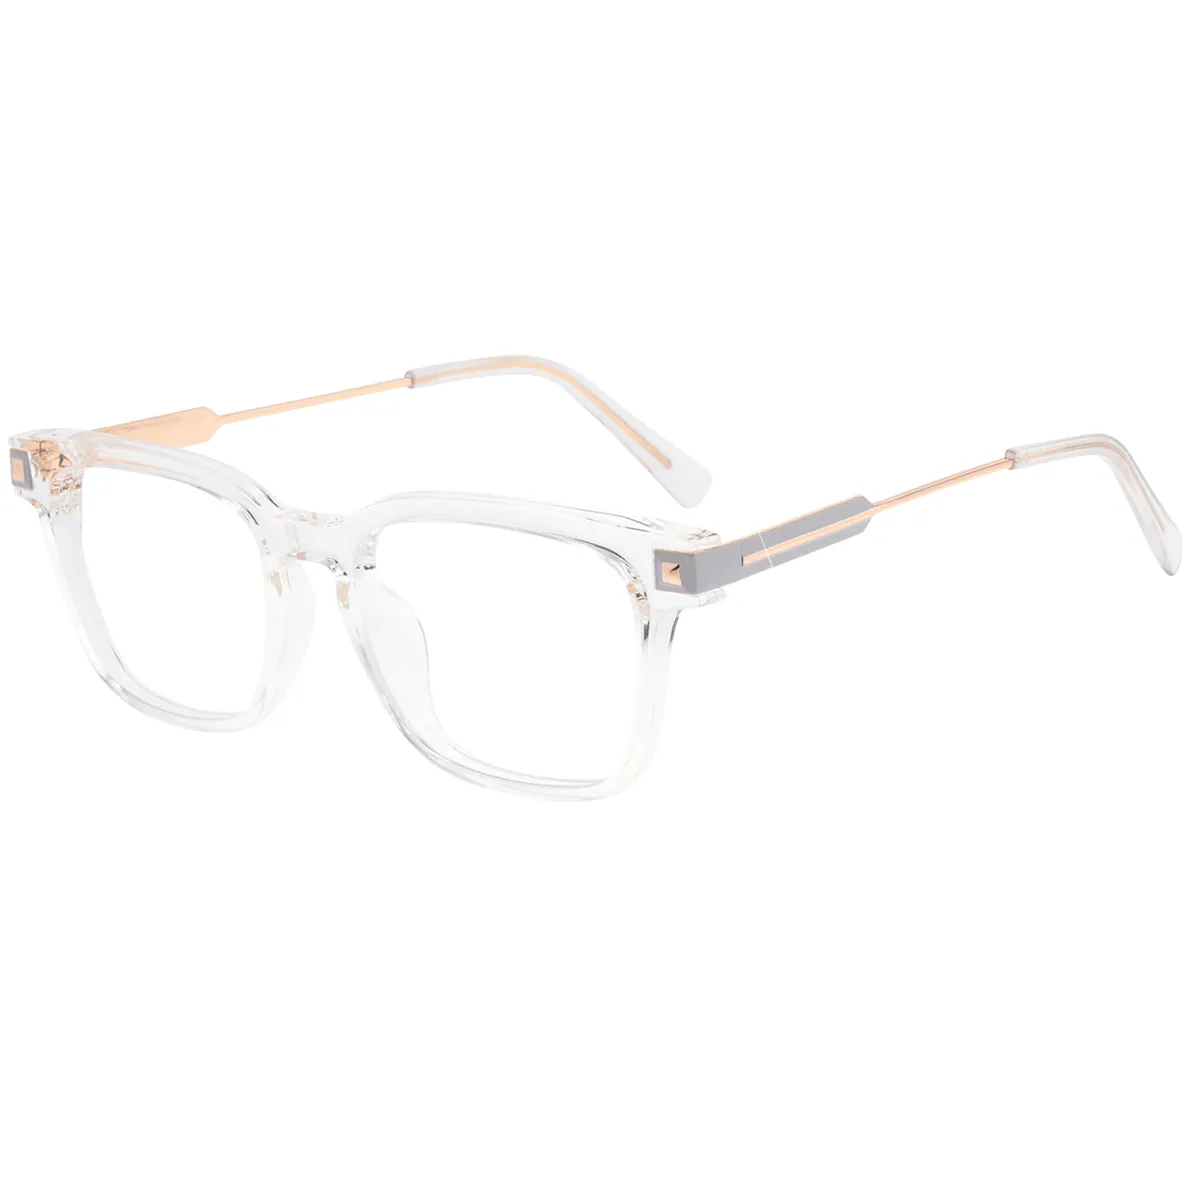 Keith - Square Translucent Glasses for Men